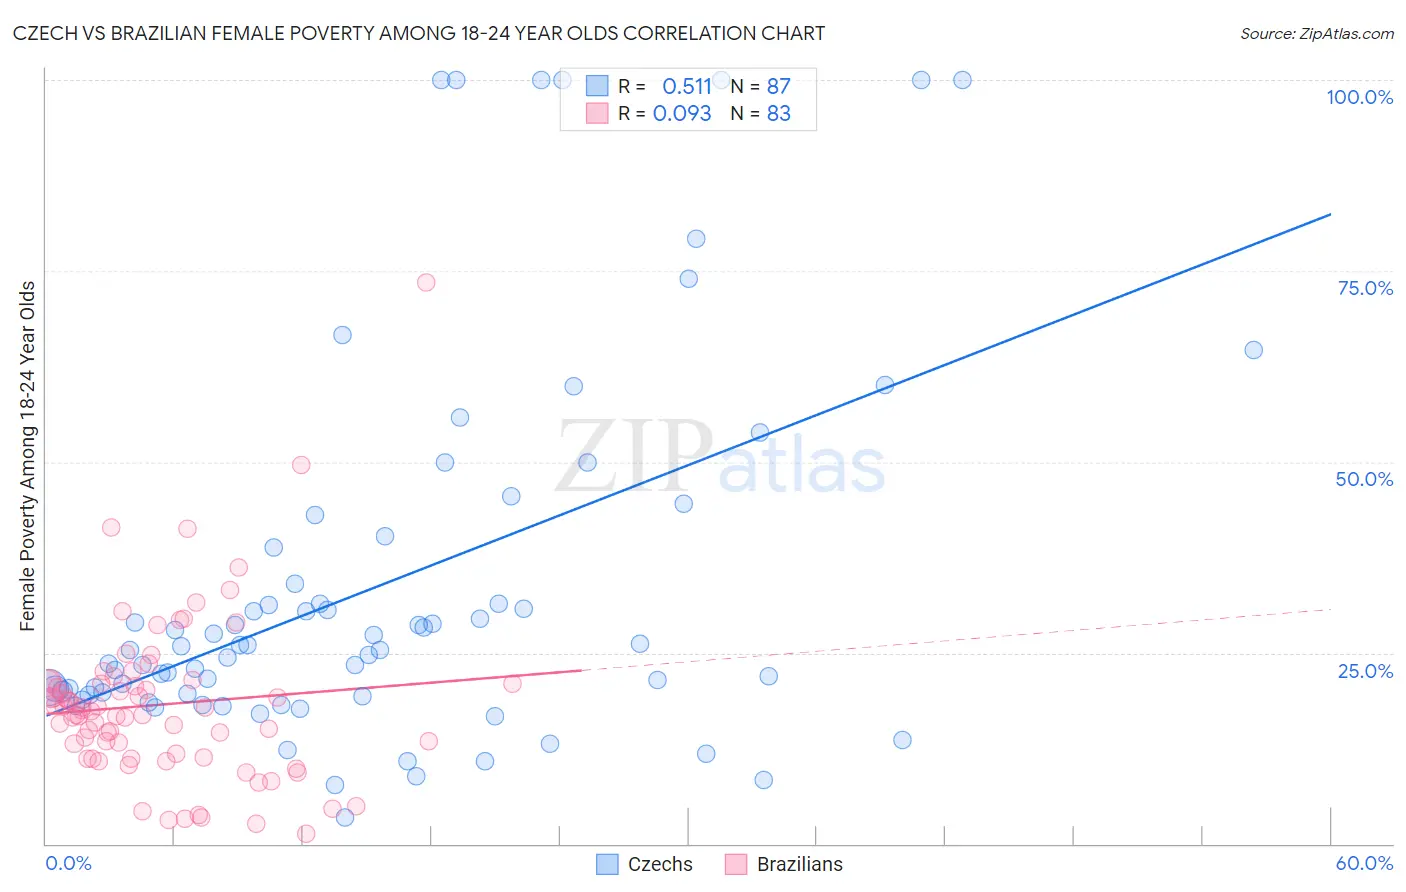 Czech vs Brazilian Female Poverty Among 18-24 Year Olds